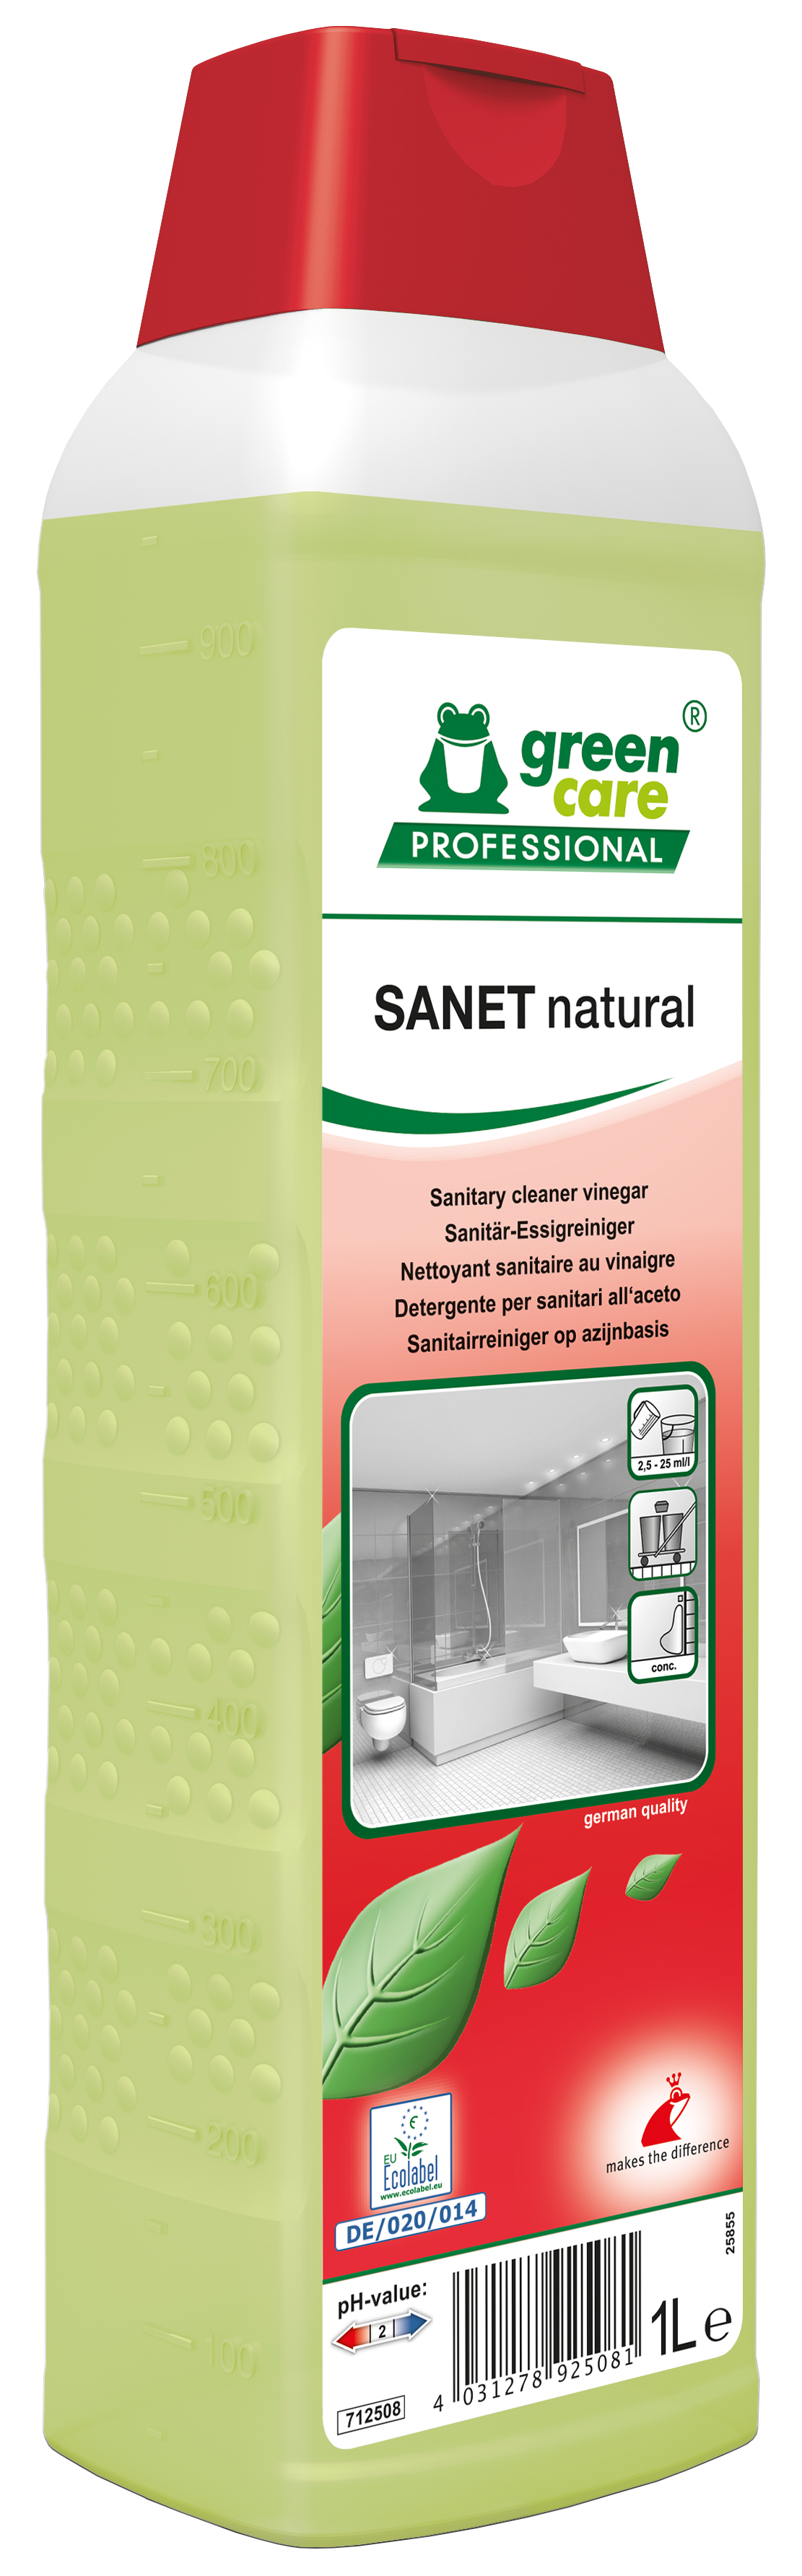 Green Care Sanet Natural 1lt.